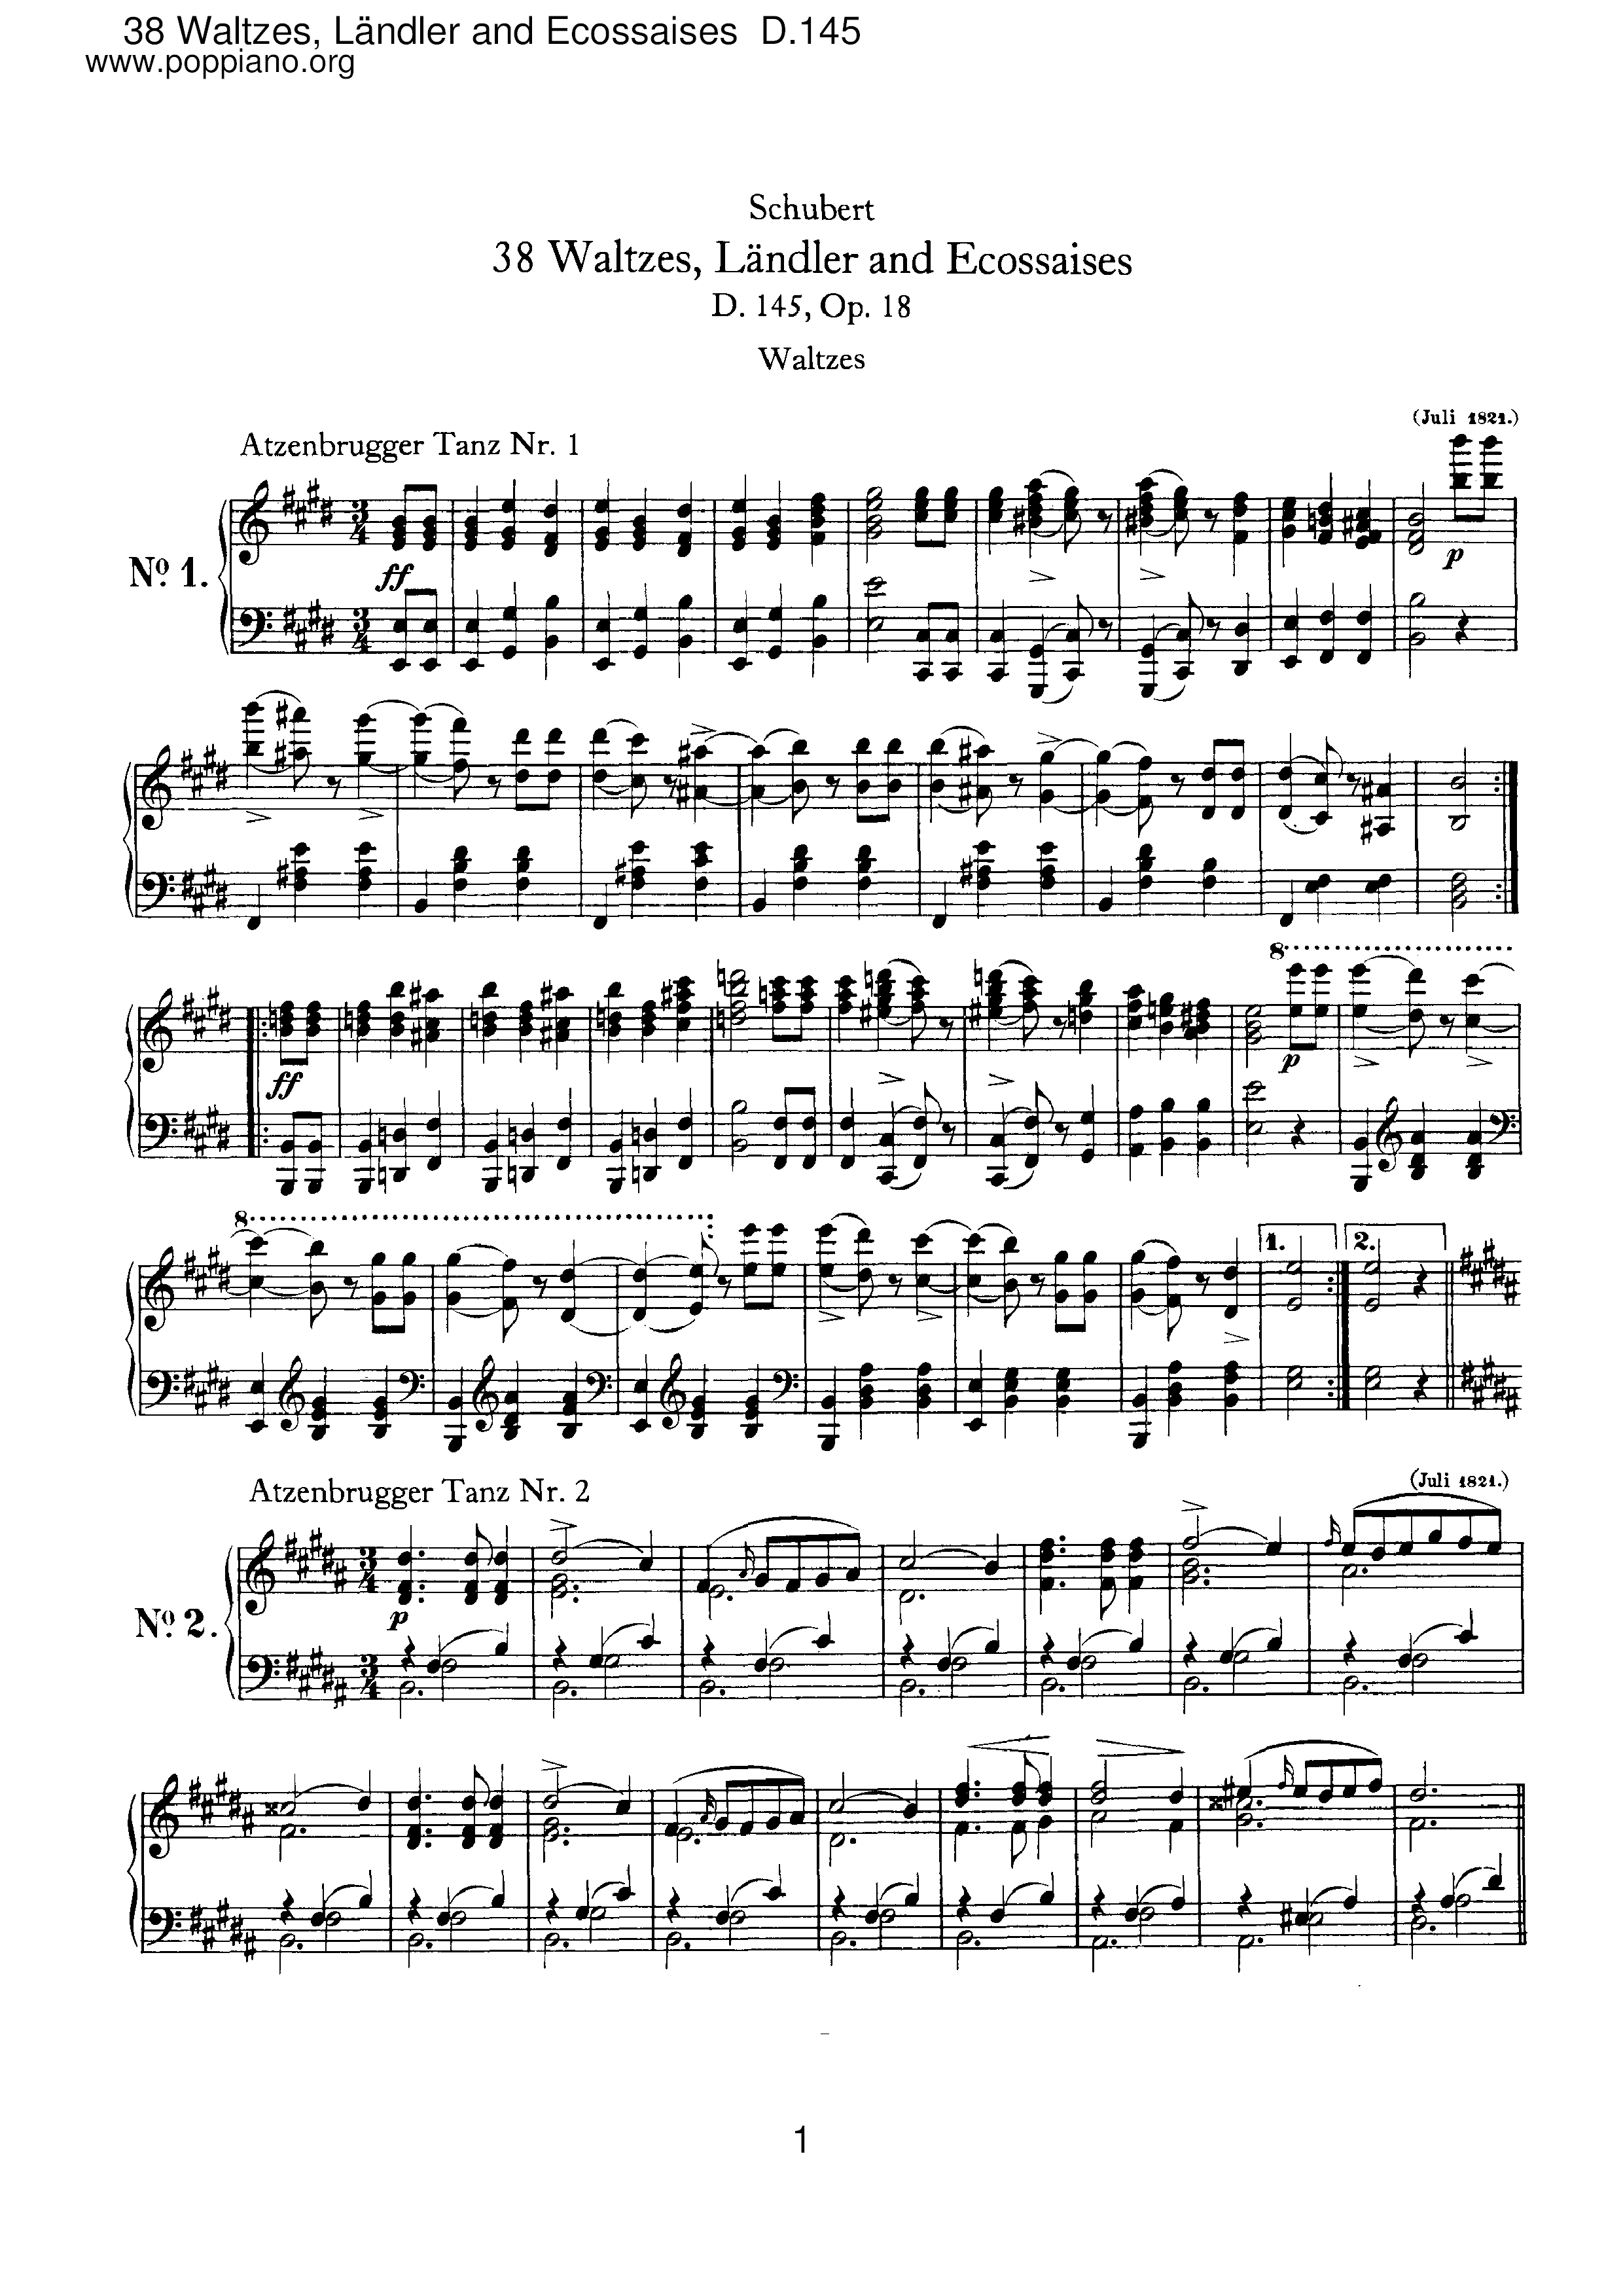 38 Waltzes, Landler and Ecossaises, D.145 Score